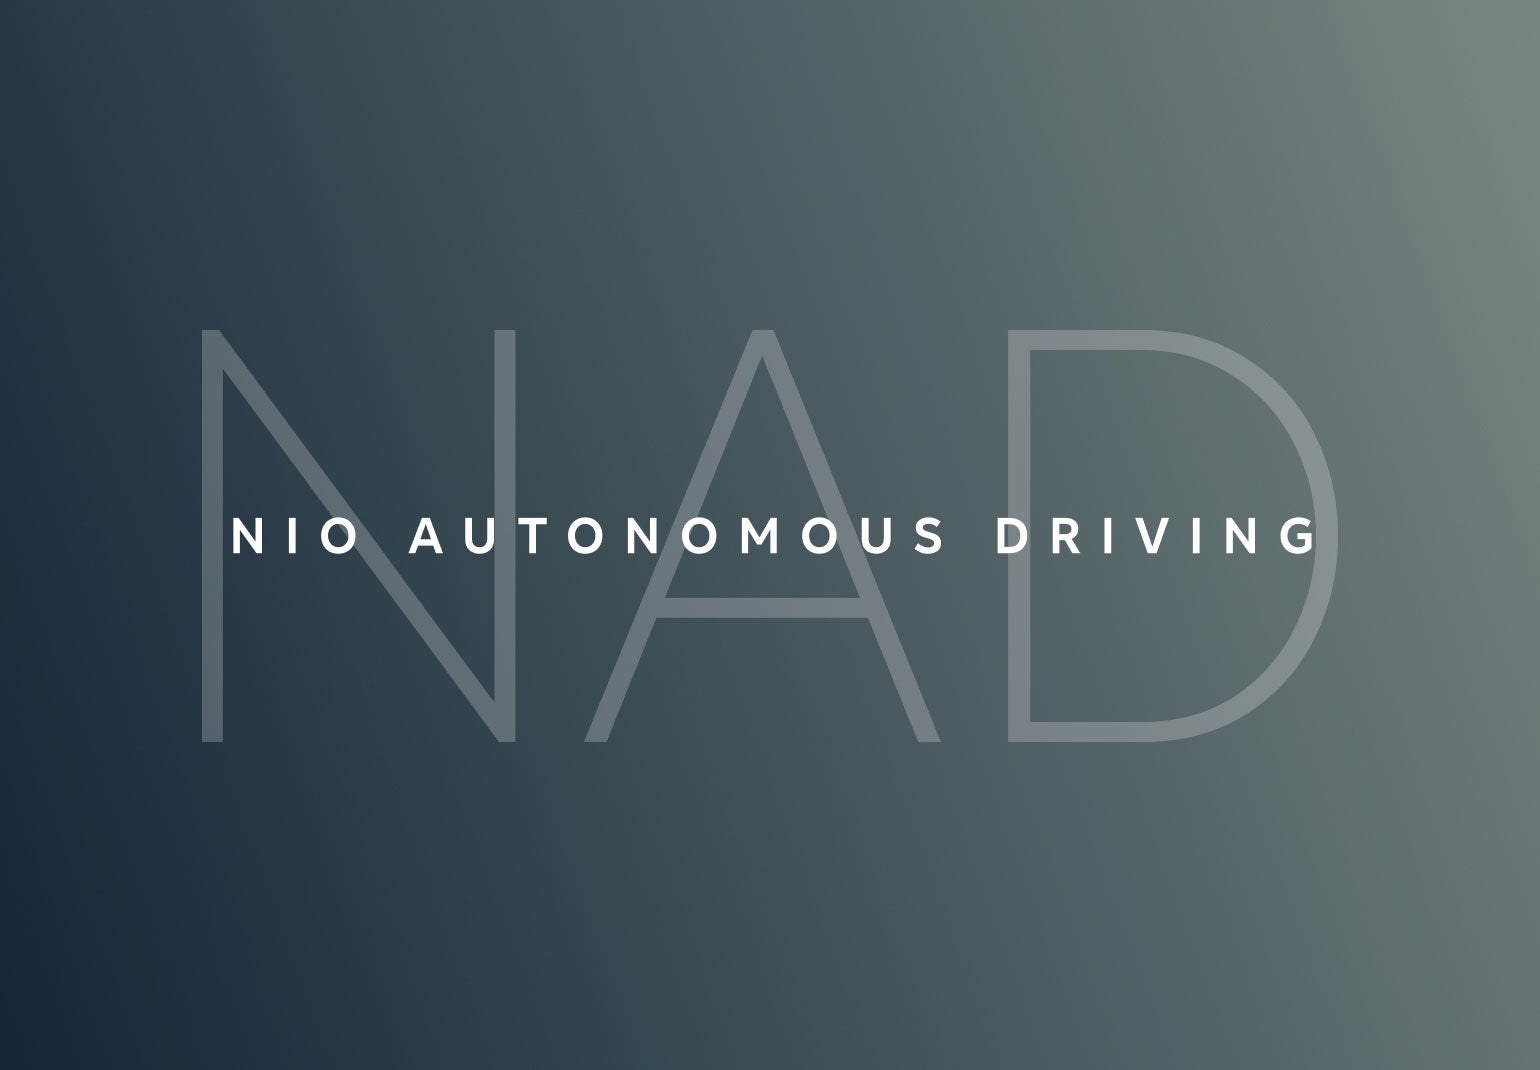 NIO Autonomous Driving